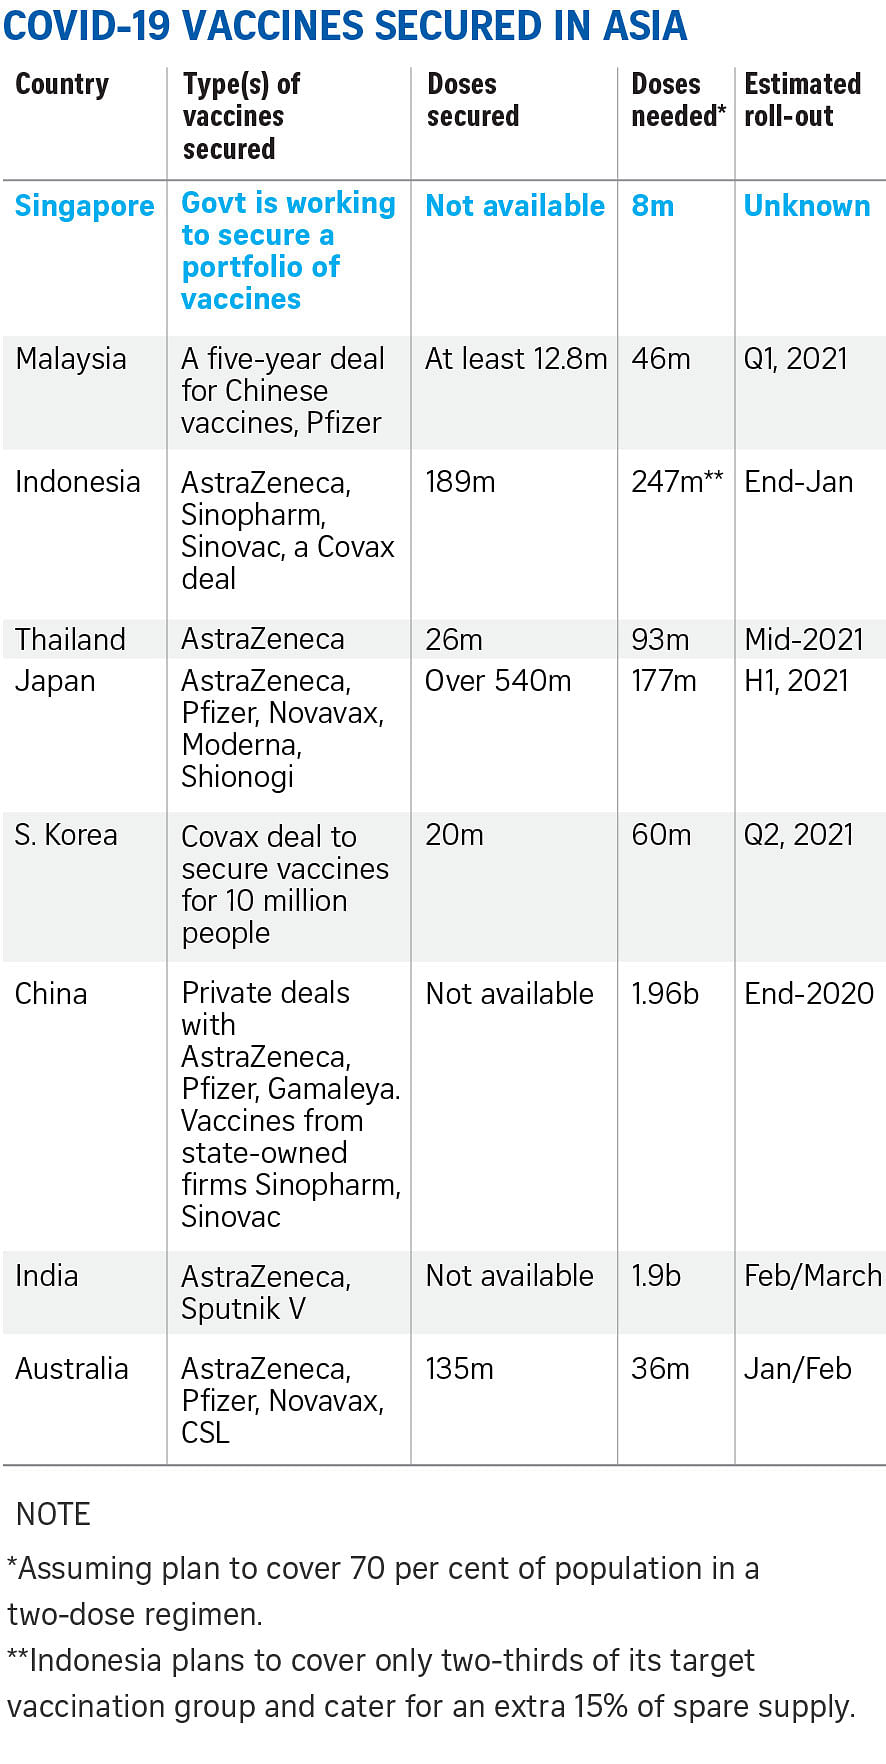 Singapore vaccine type